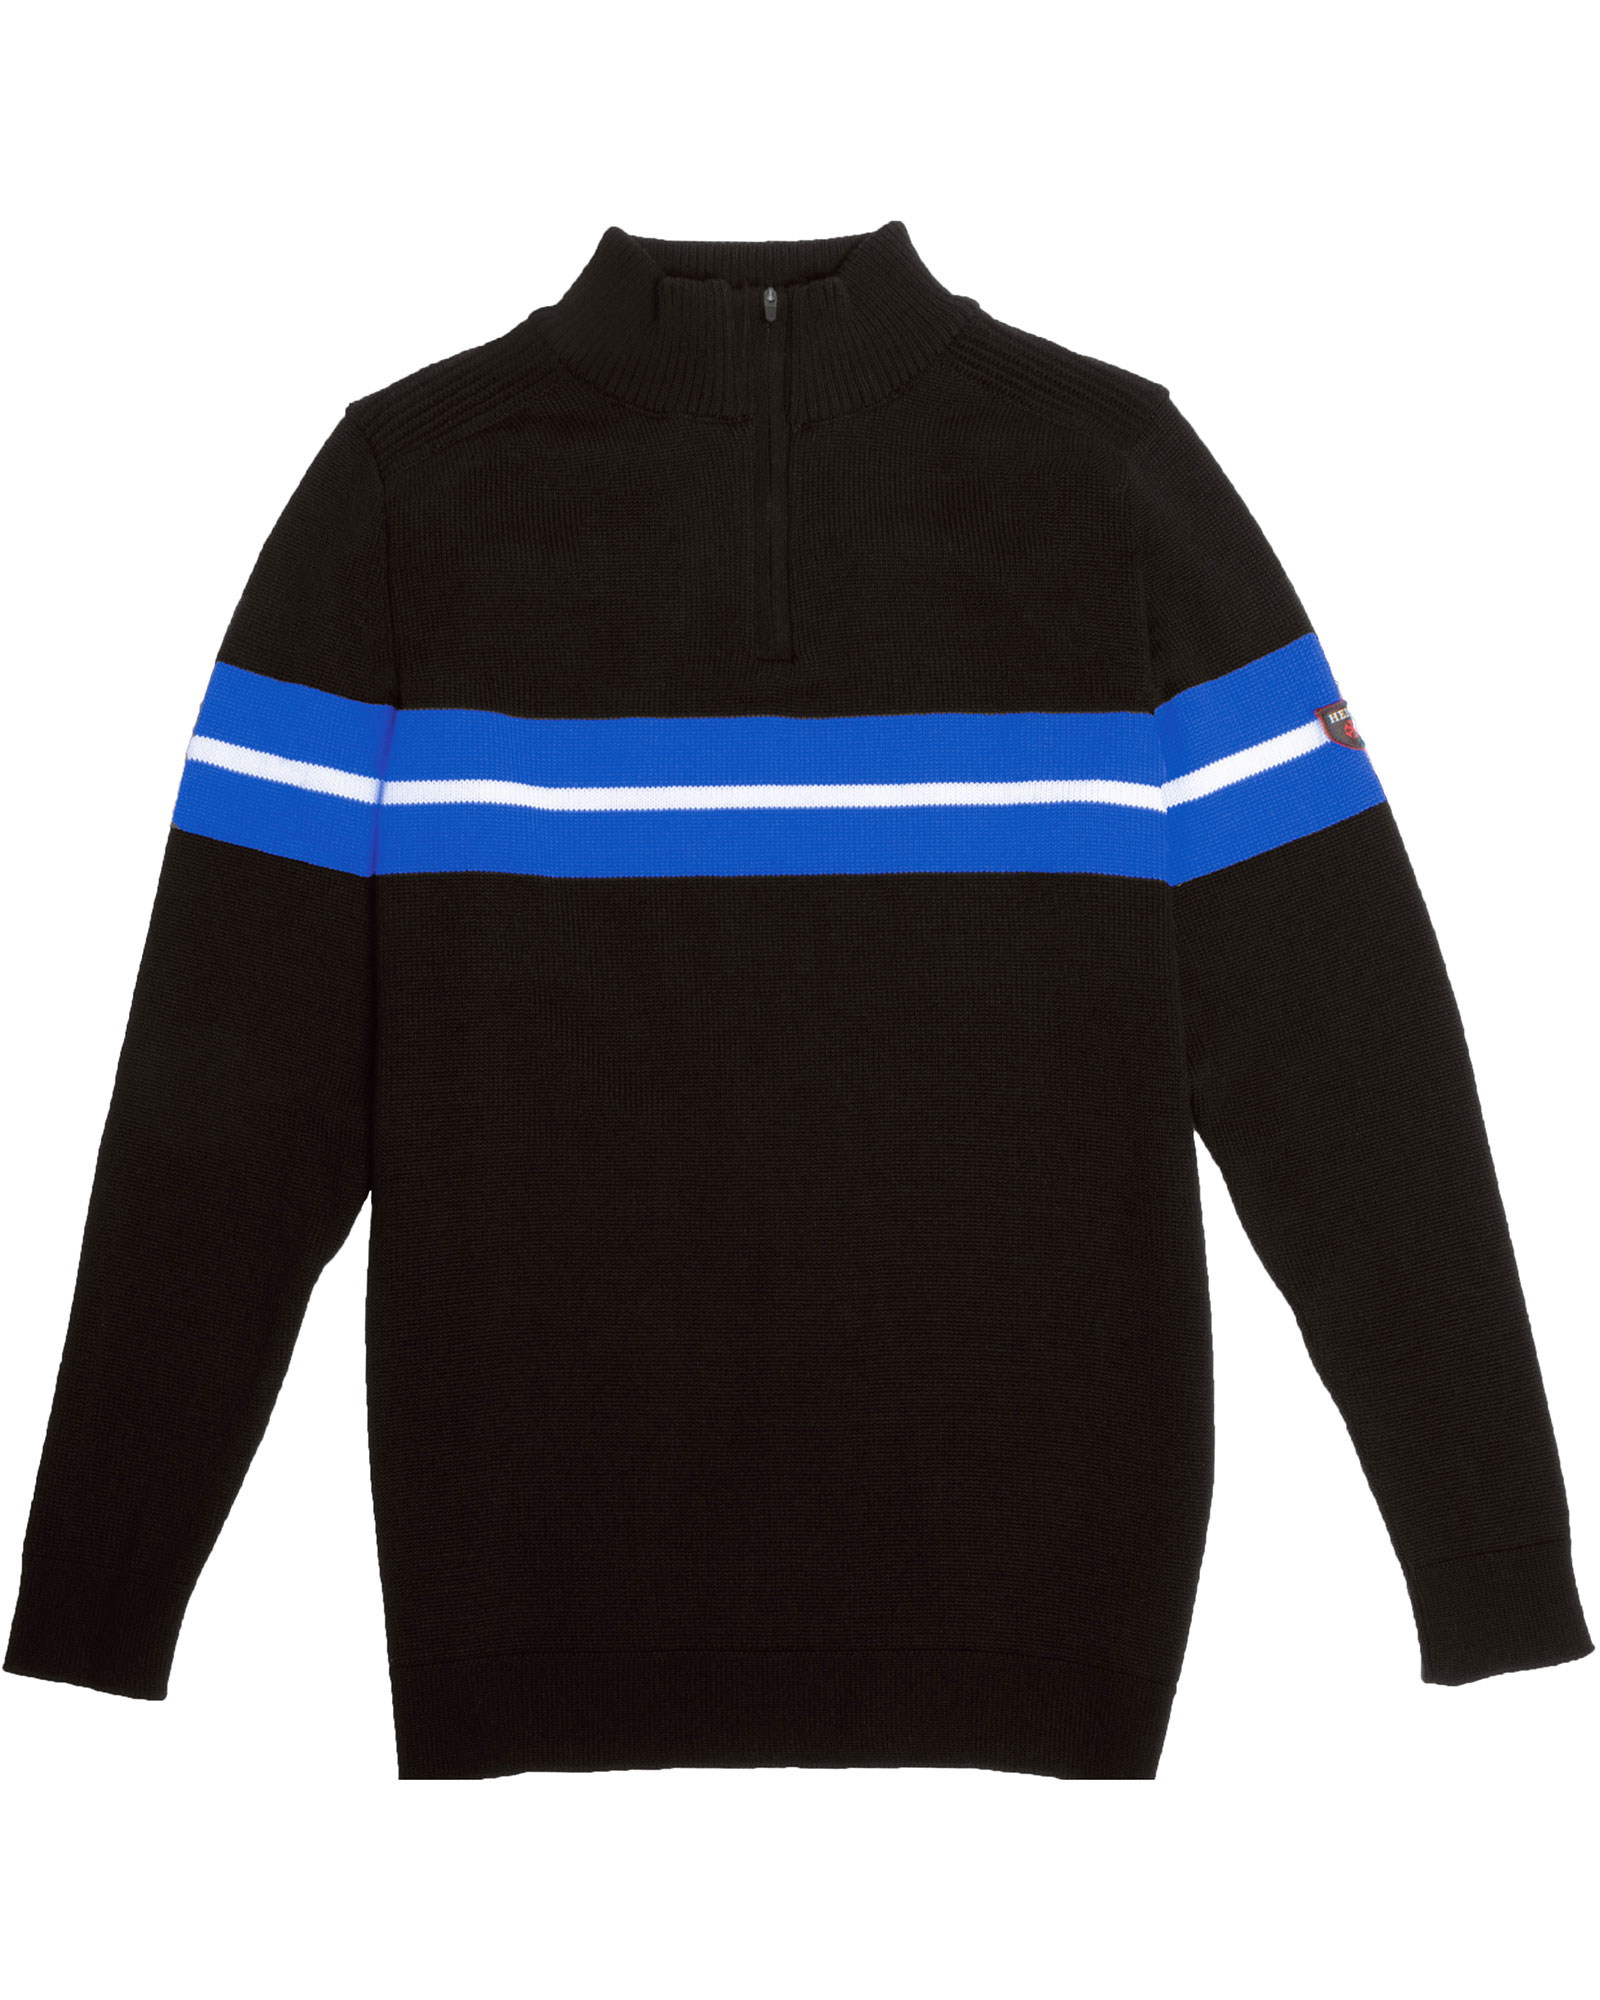 Henjl Carve Half Zip Men’s Merino Sweater - Black/Snow/Bright Blue S